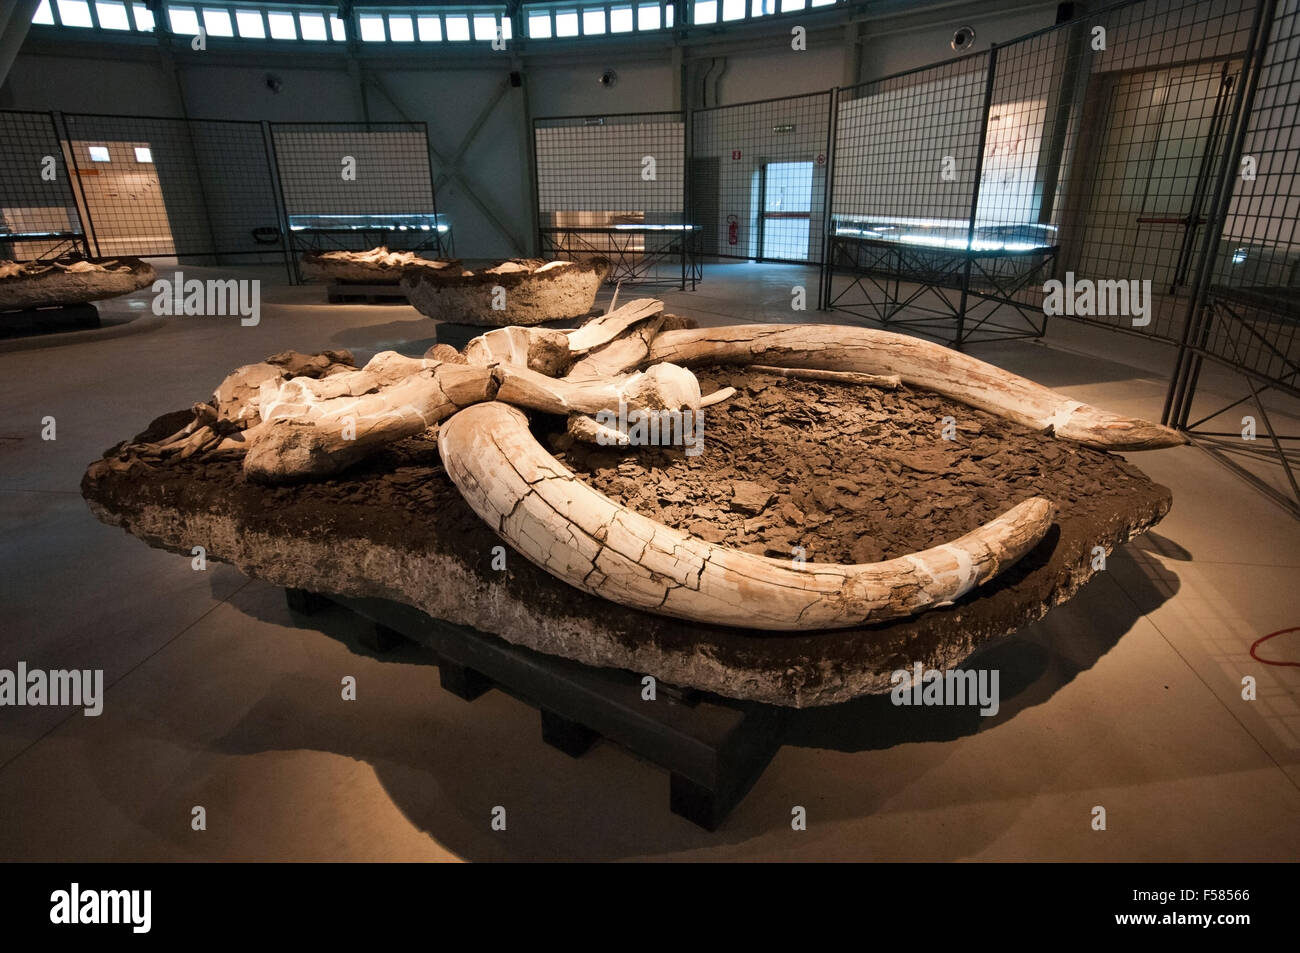 Pietrafitta, Paleontological Museum Luigi Boldrini, fossil remains of mammals, Umbria, Italy Stock Photo